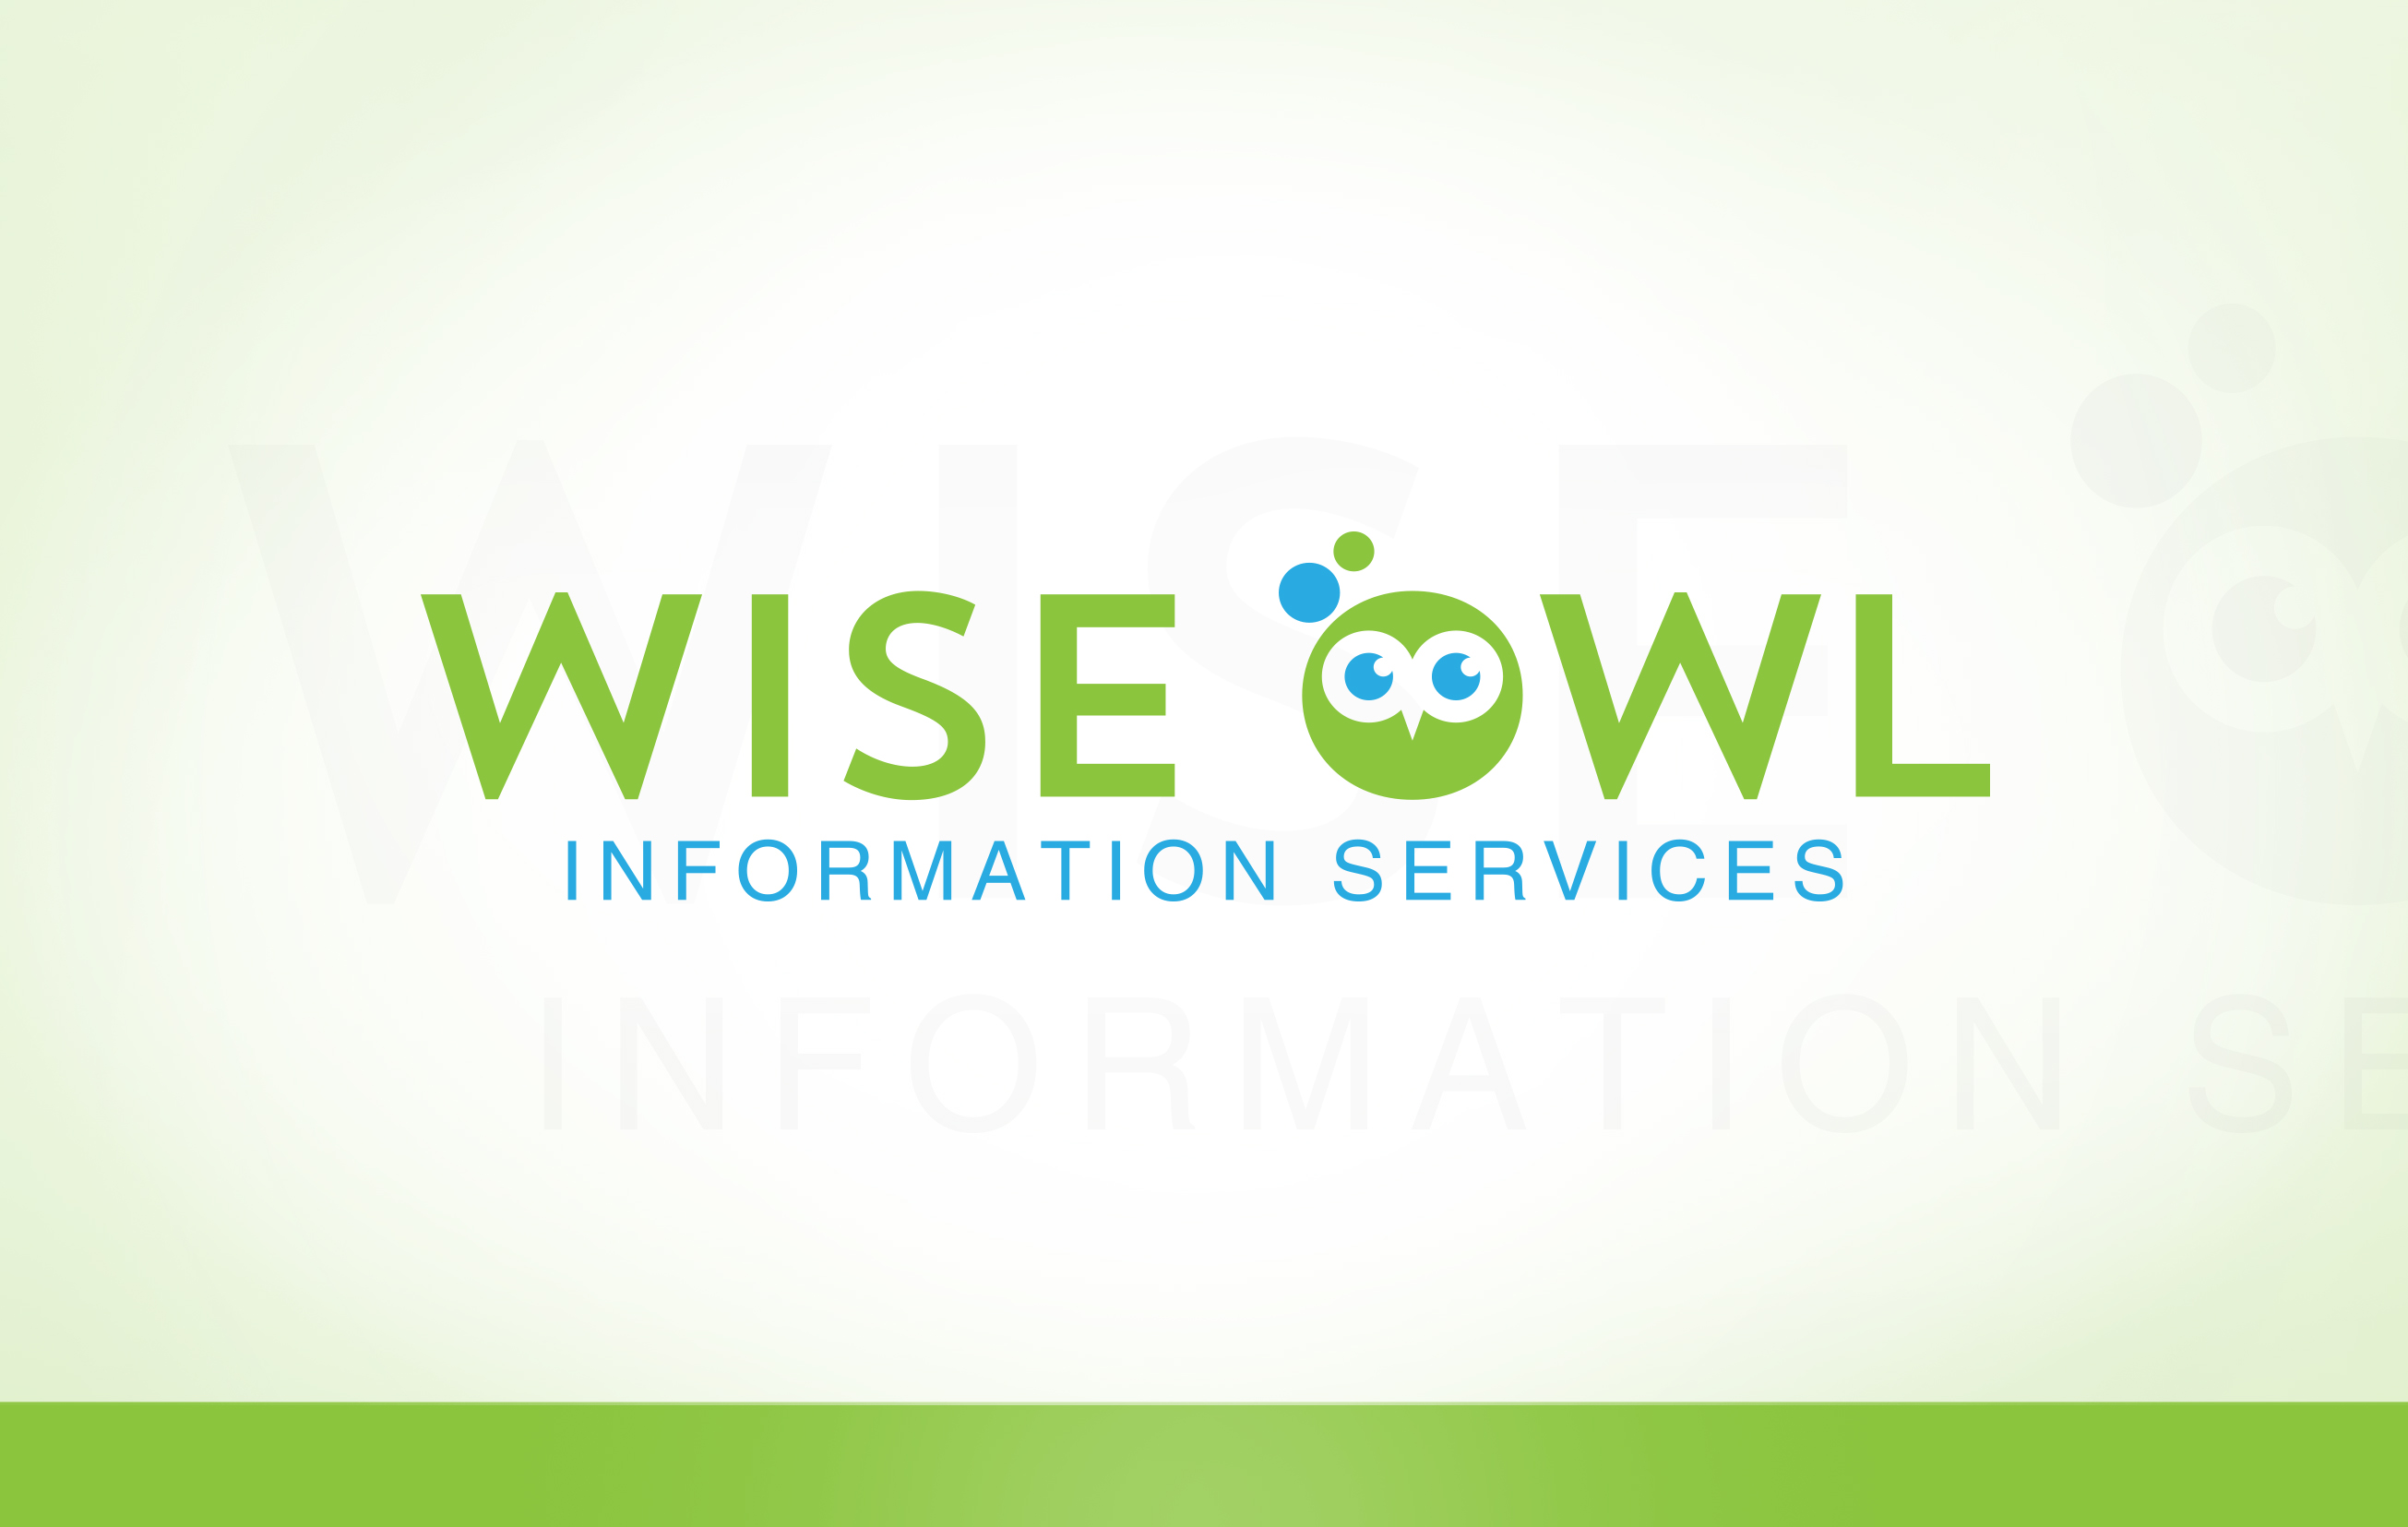 Wise Owl Information Services Design #4